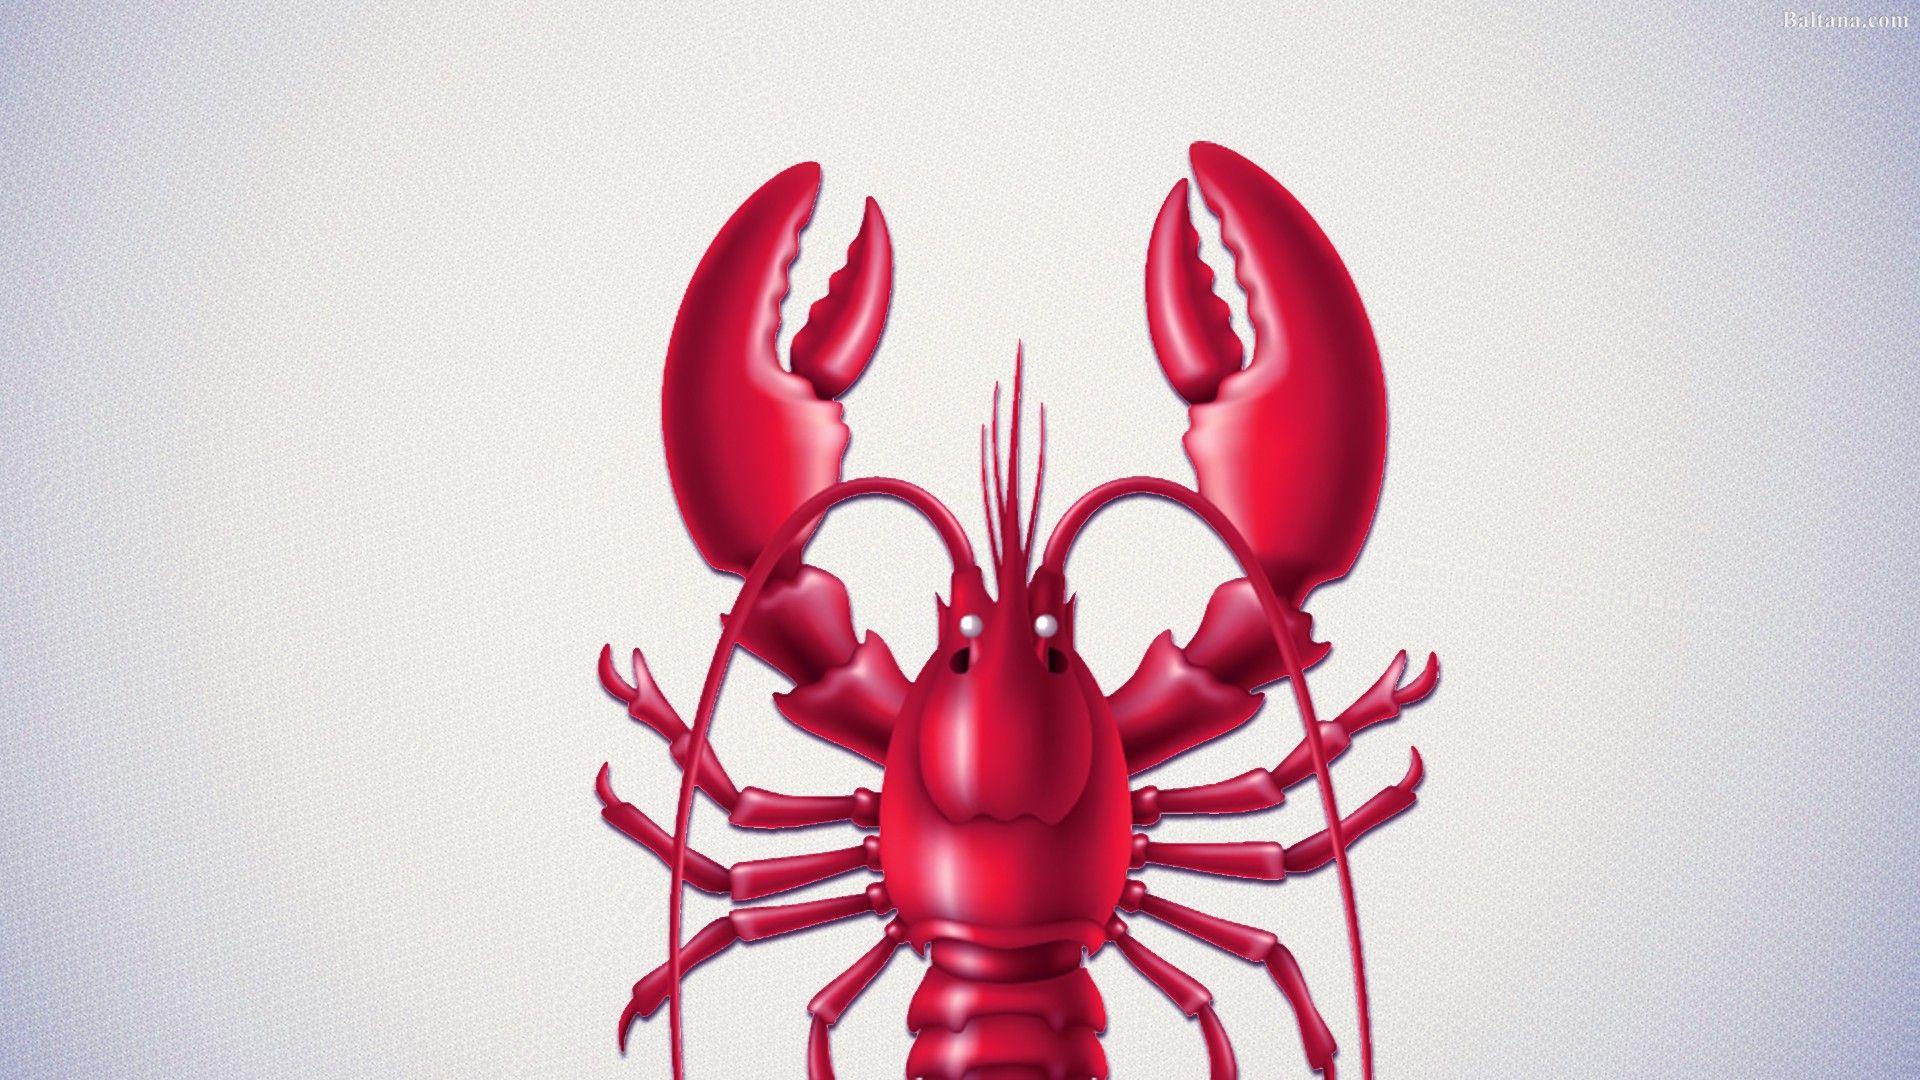 Lobster Wallpaper 1080p 1920x1080